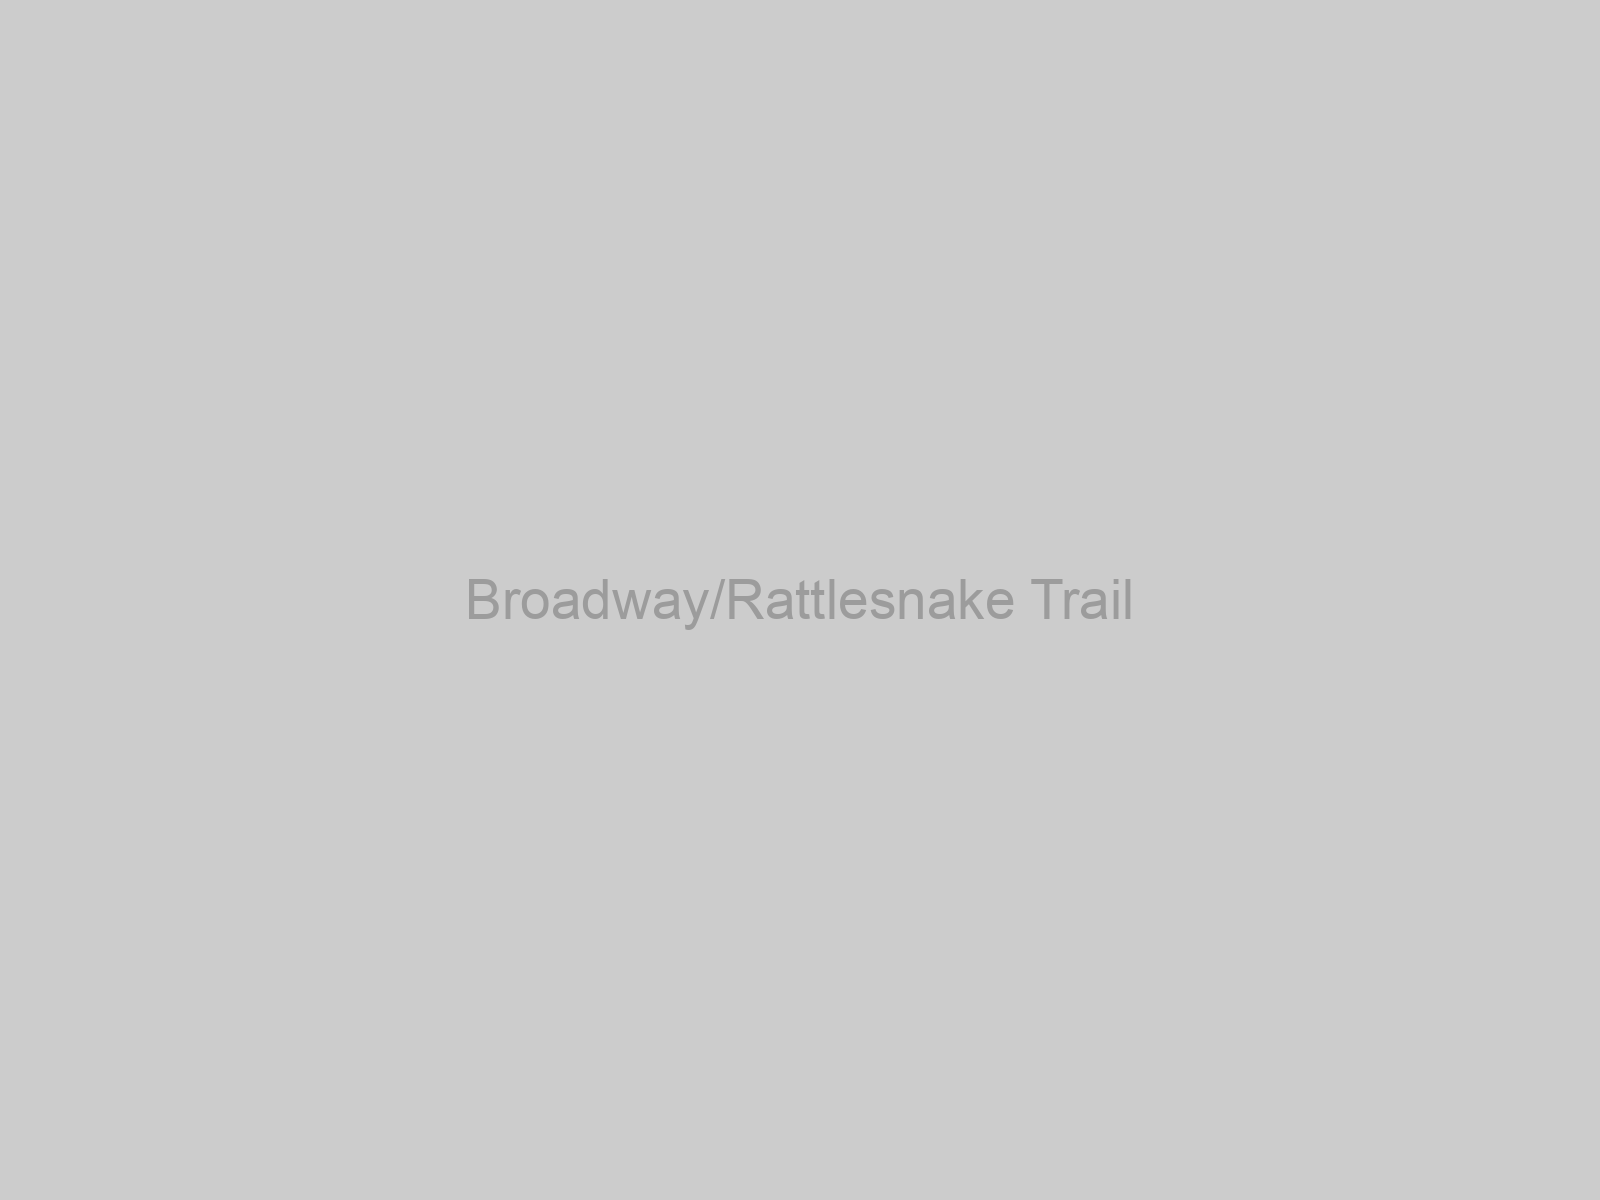 Broadway/Rattlesnake Trail